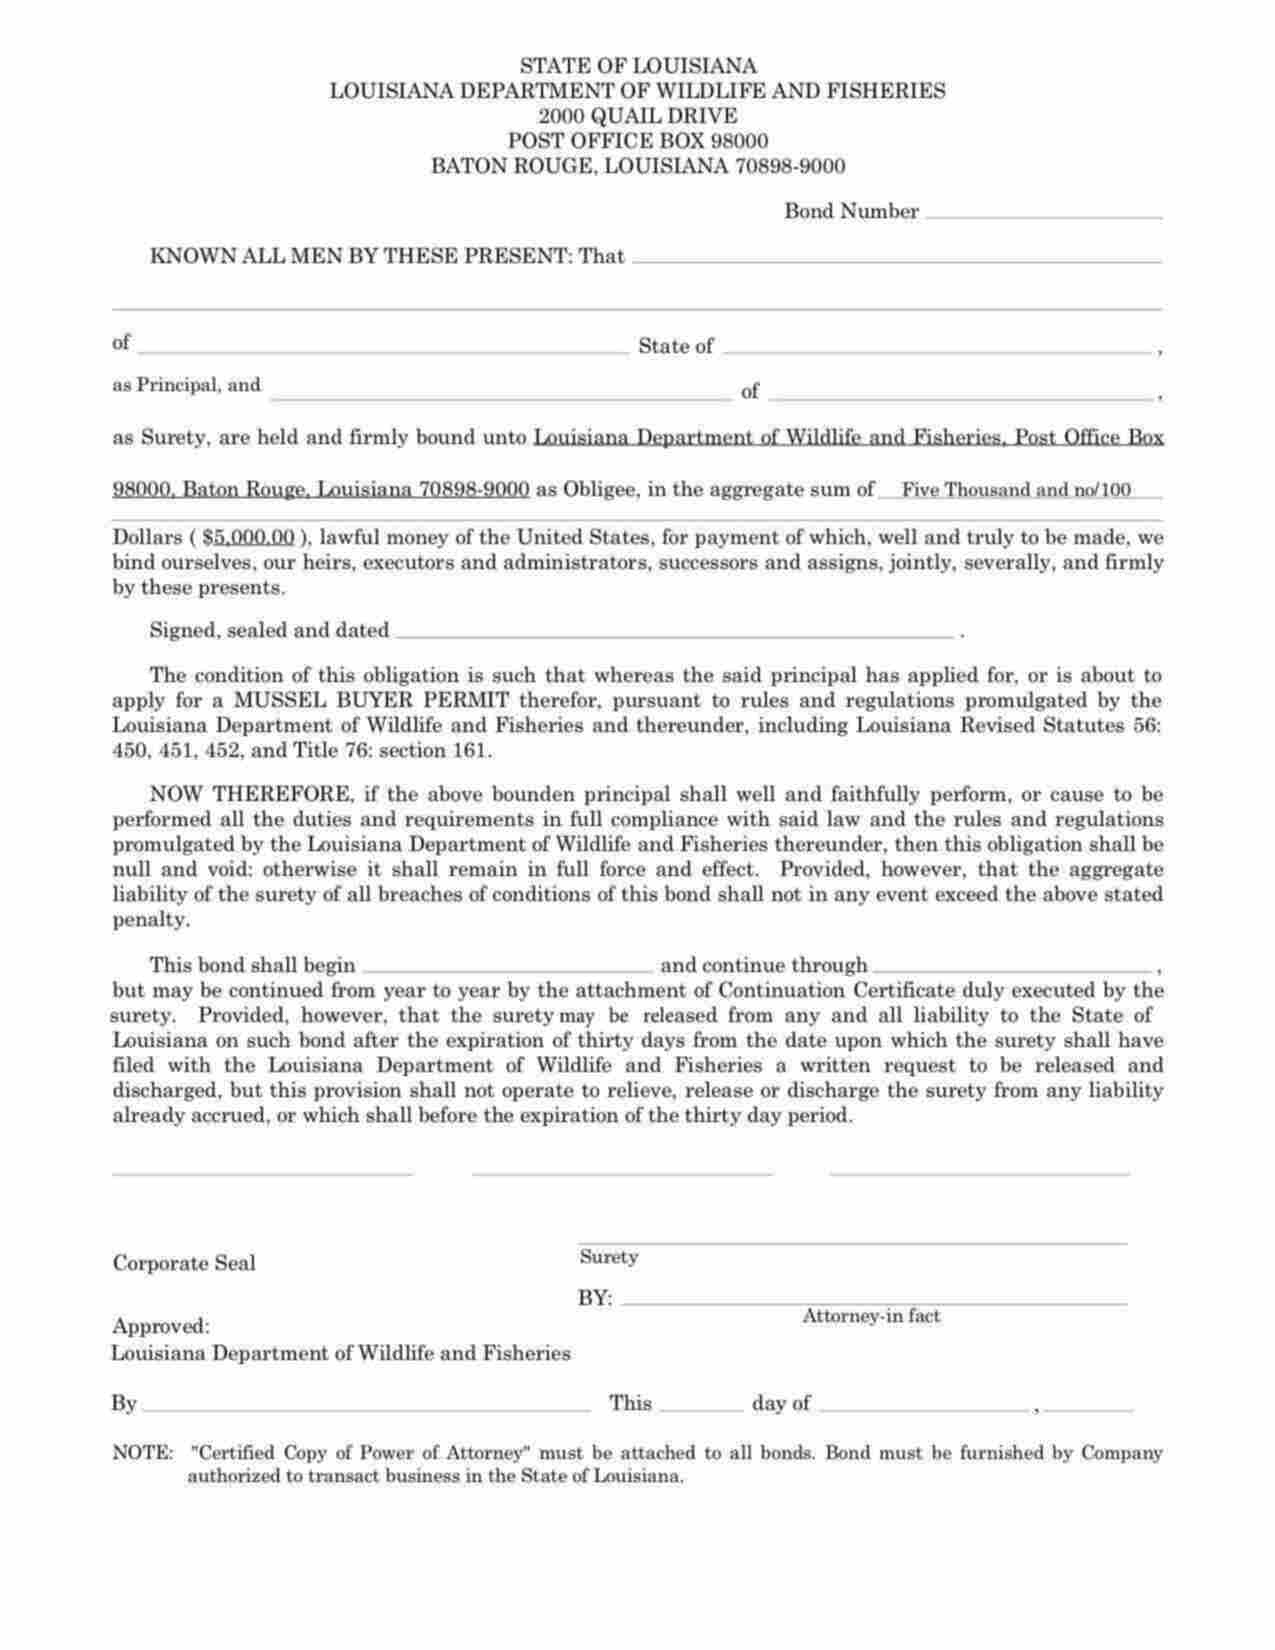 Louisiana Mussel Buyer Permit Bond Form